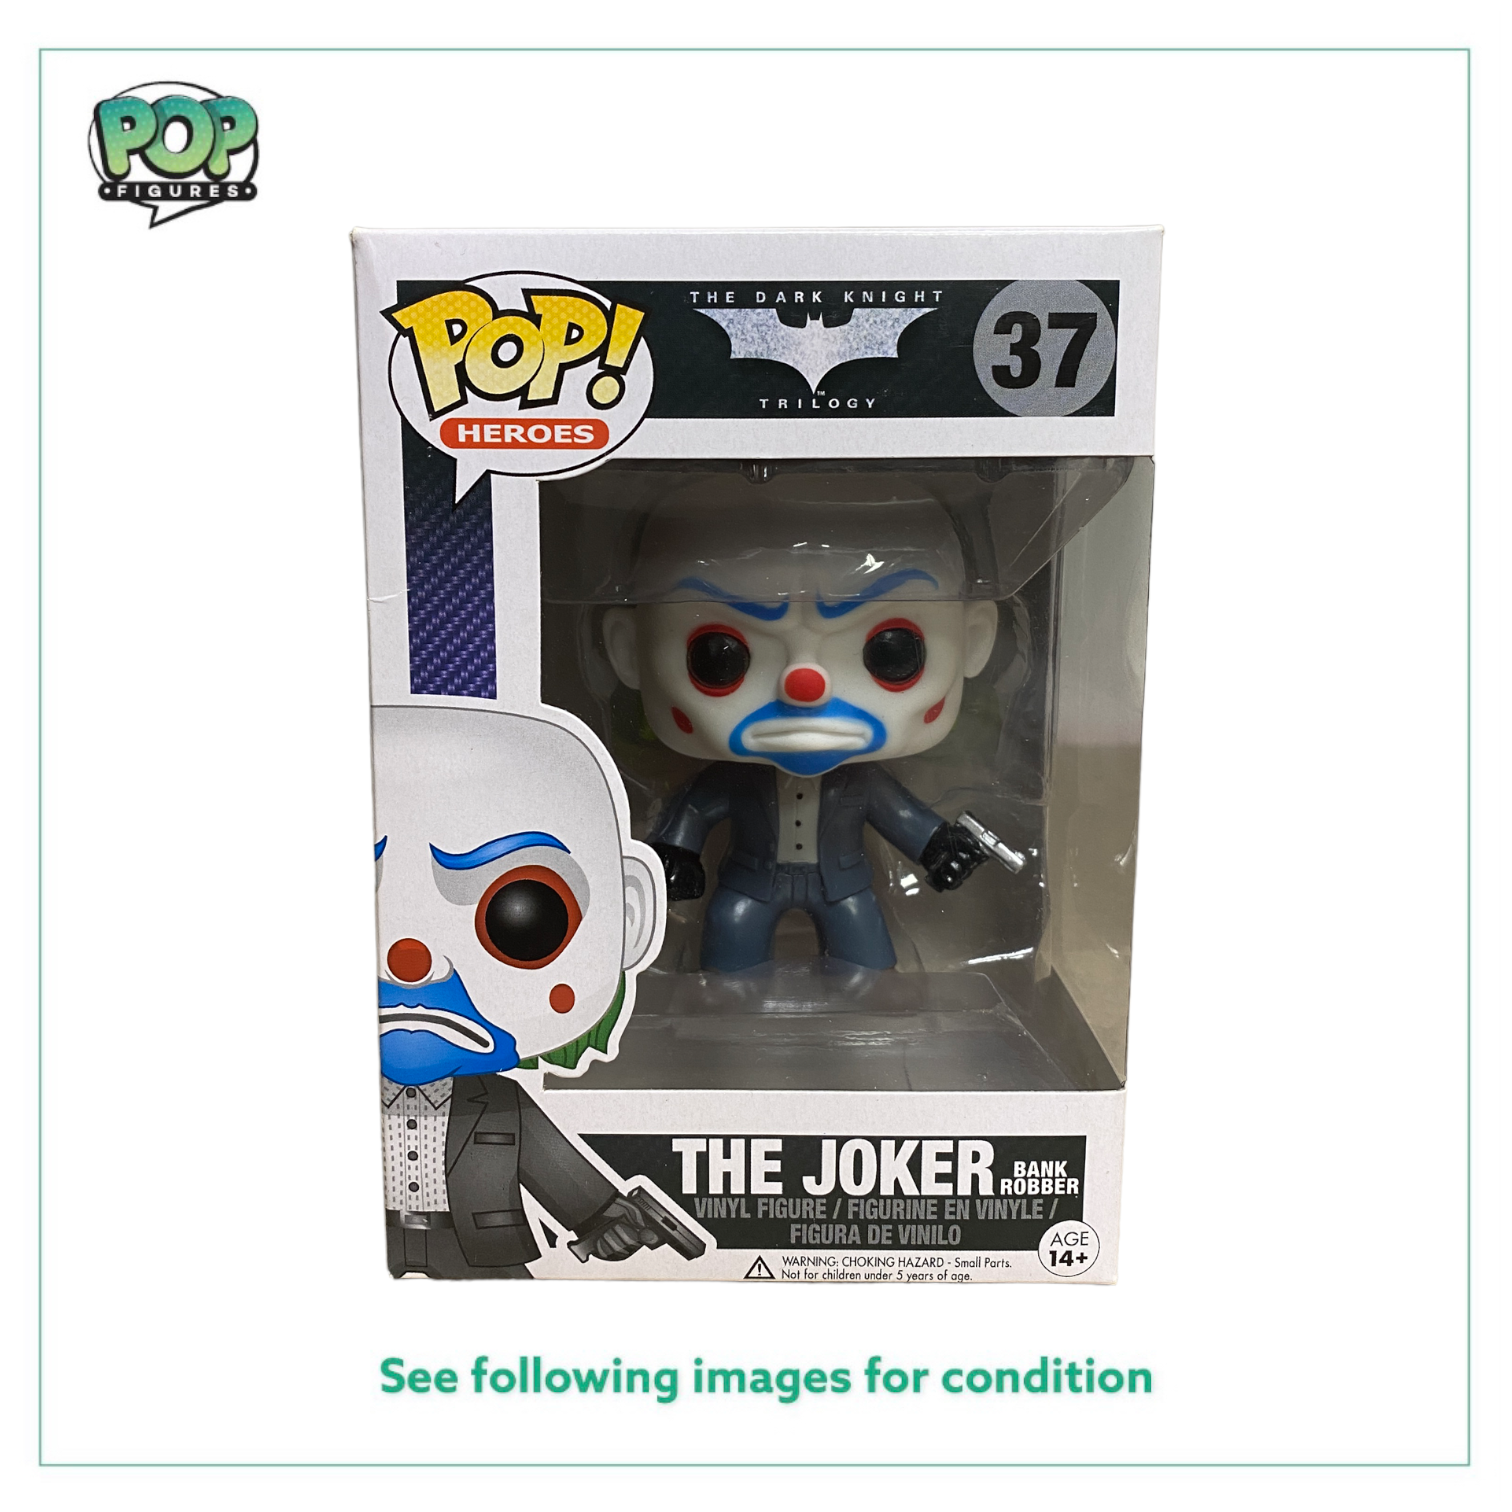 The Joker Bank Robber #37 Funko Pop! - Batman: The Dark Knight Trilogy - 2013 Pop! - Condition 8.5/10